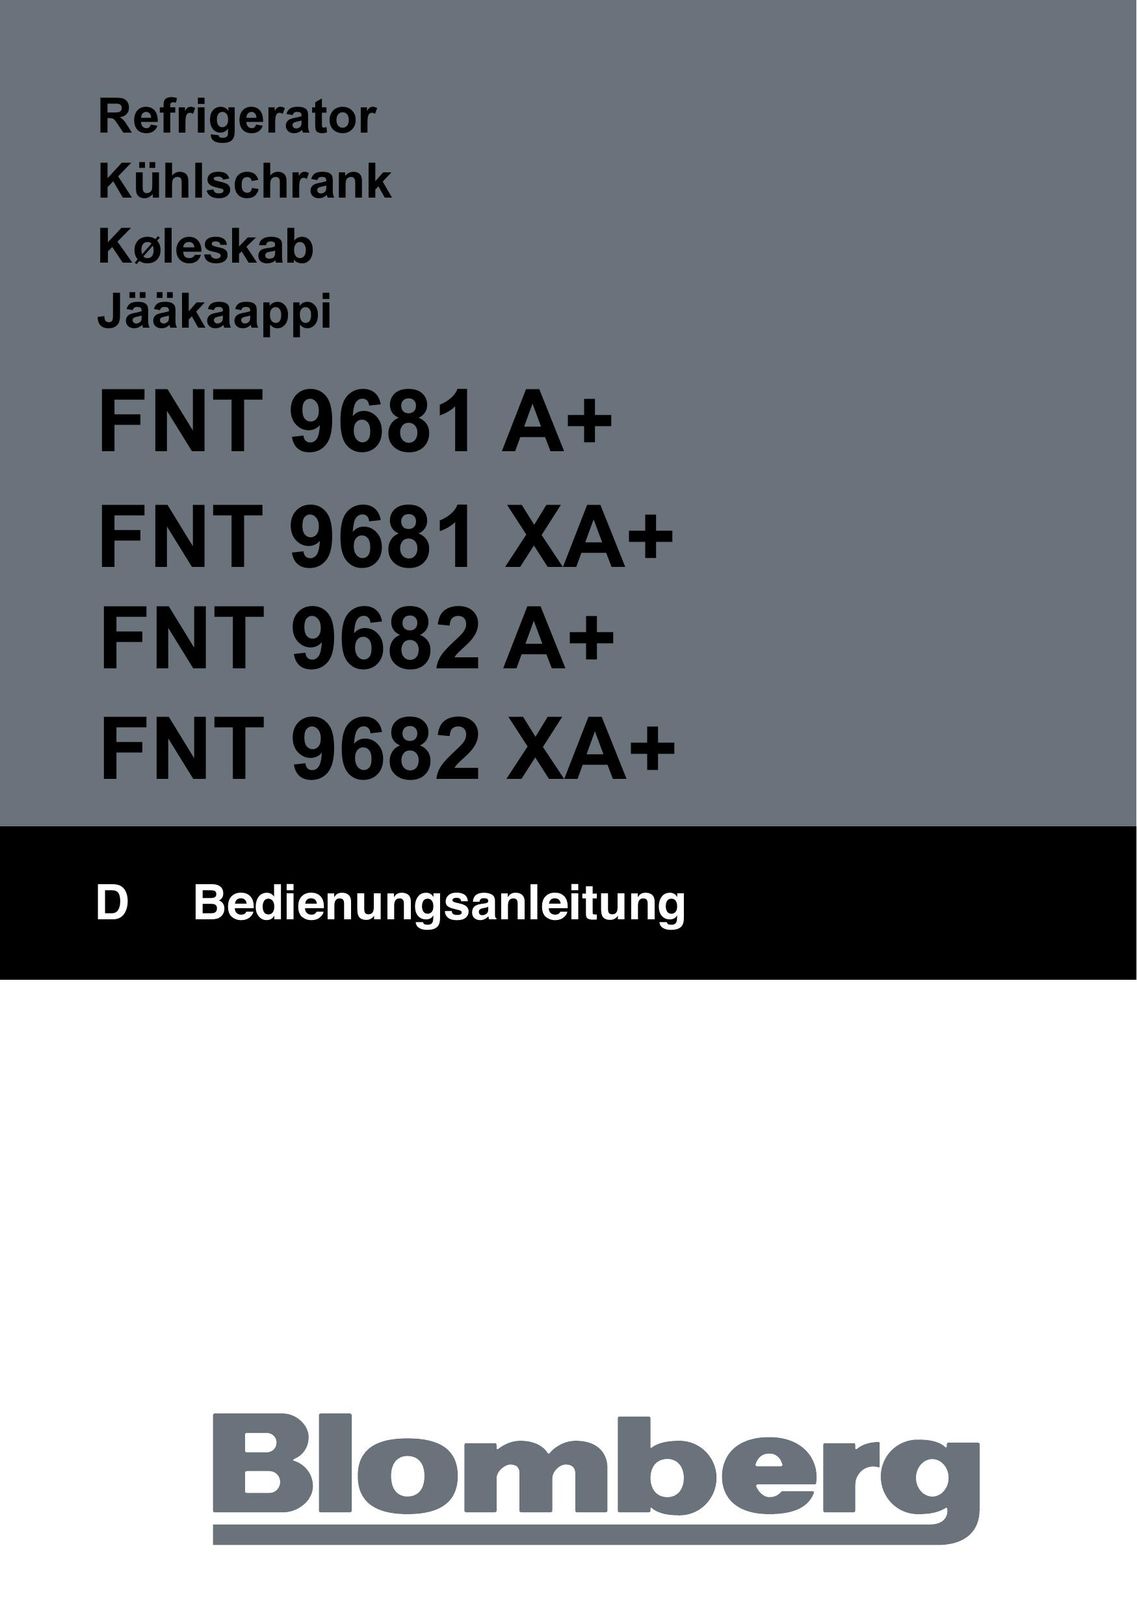 Blomberg FNT 9682 XA+ Freezer User Manual